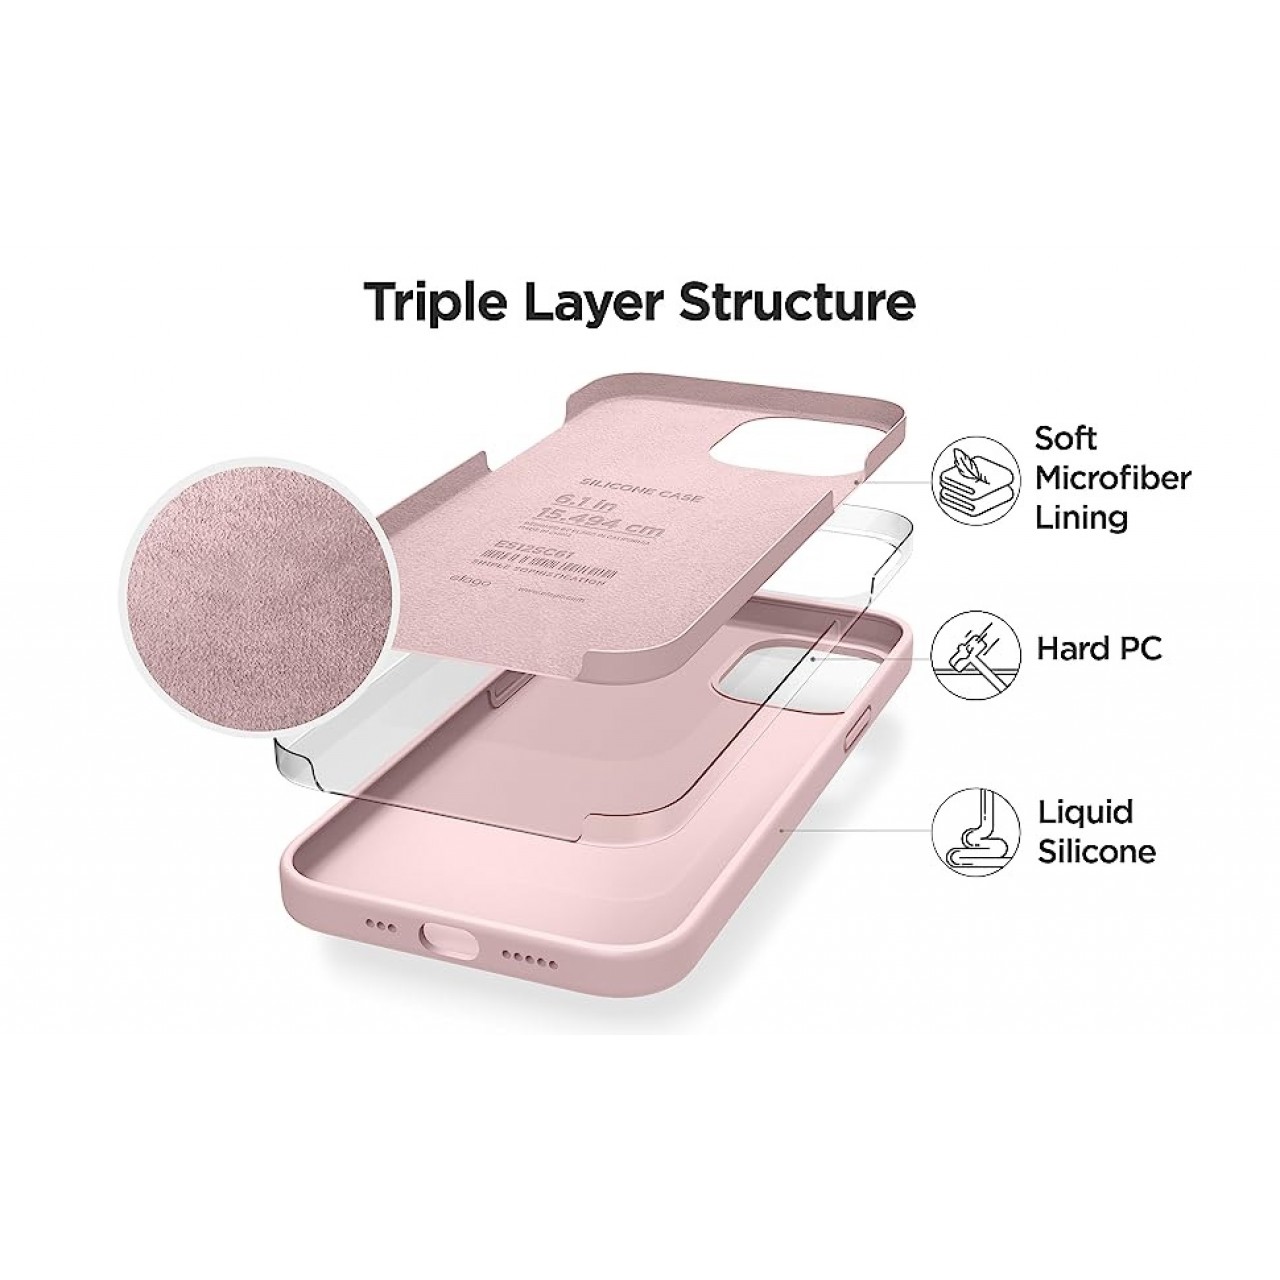 iPhone 11 Pro Θήκη Σιλικόνης - Back Silicone Case Purple